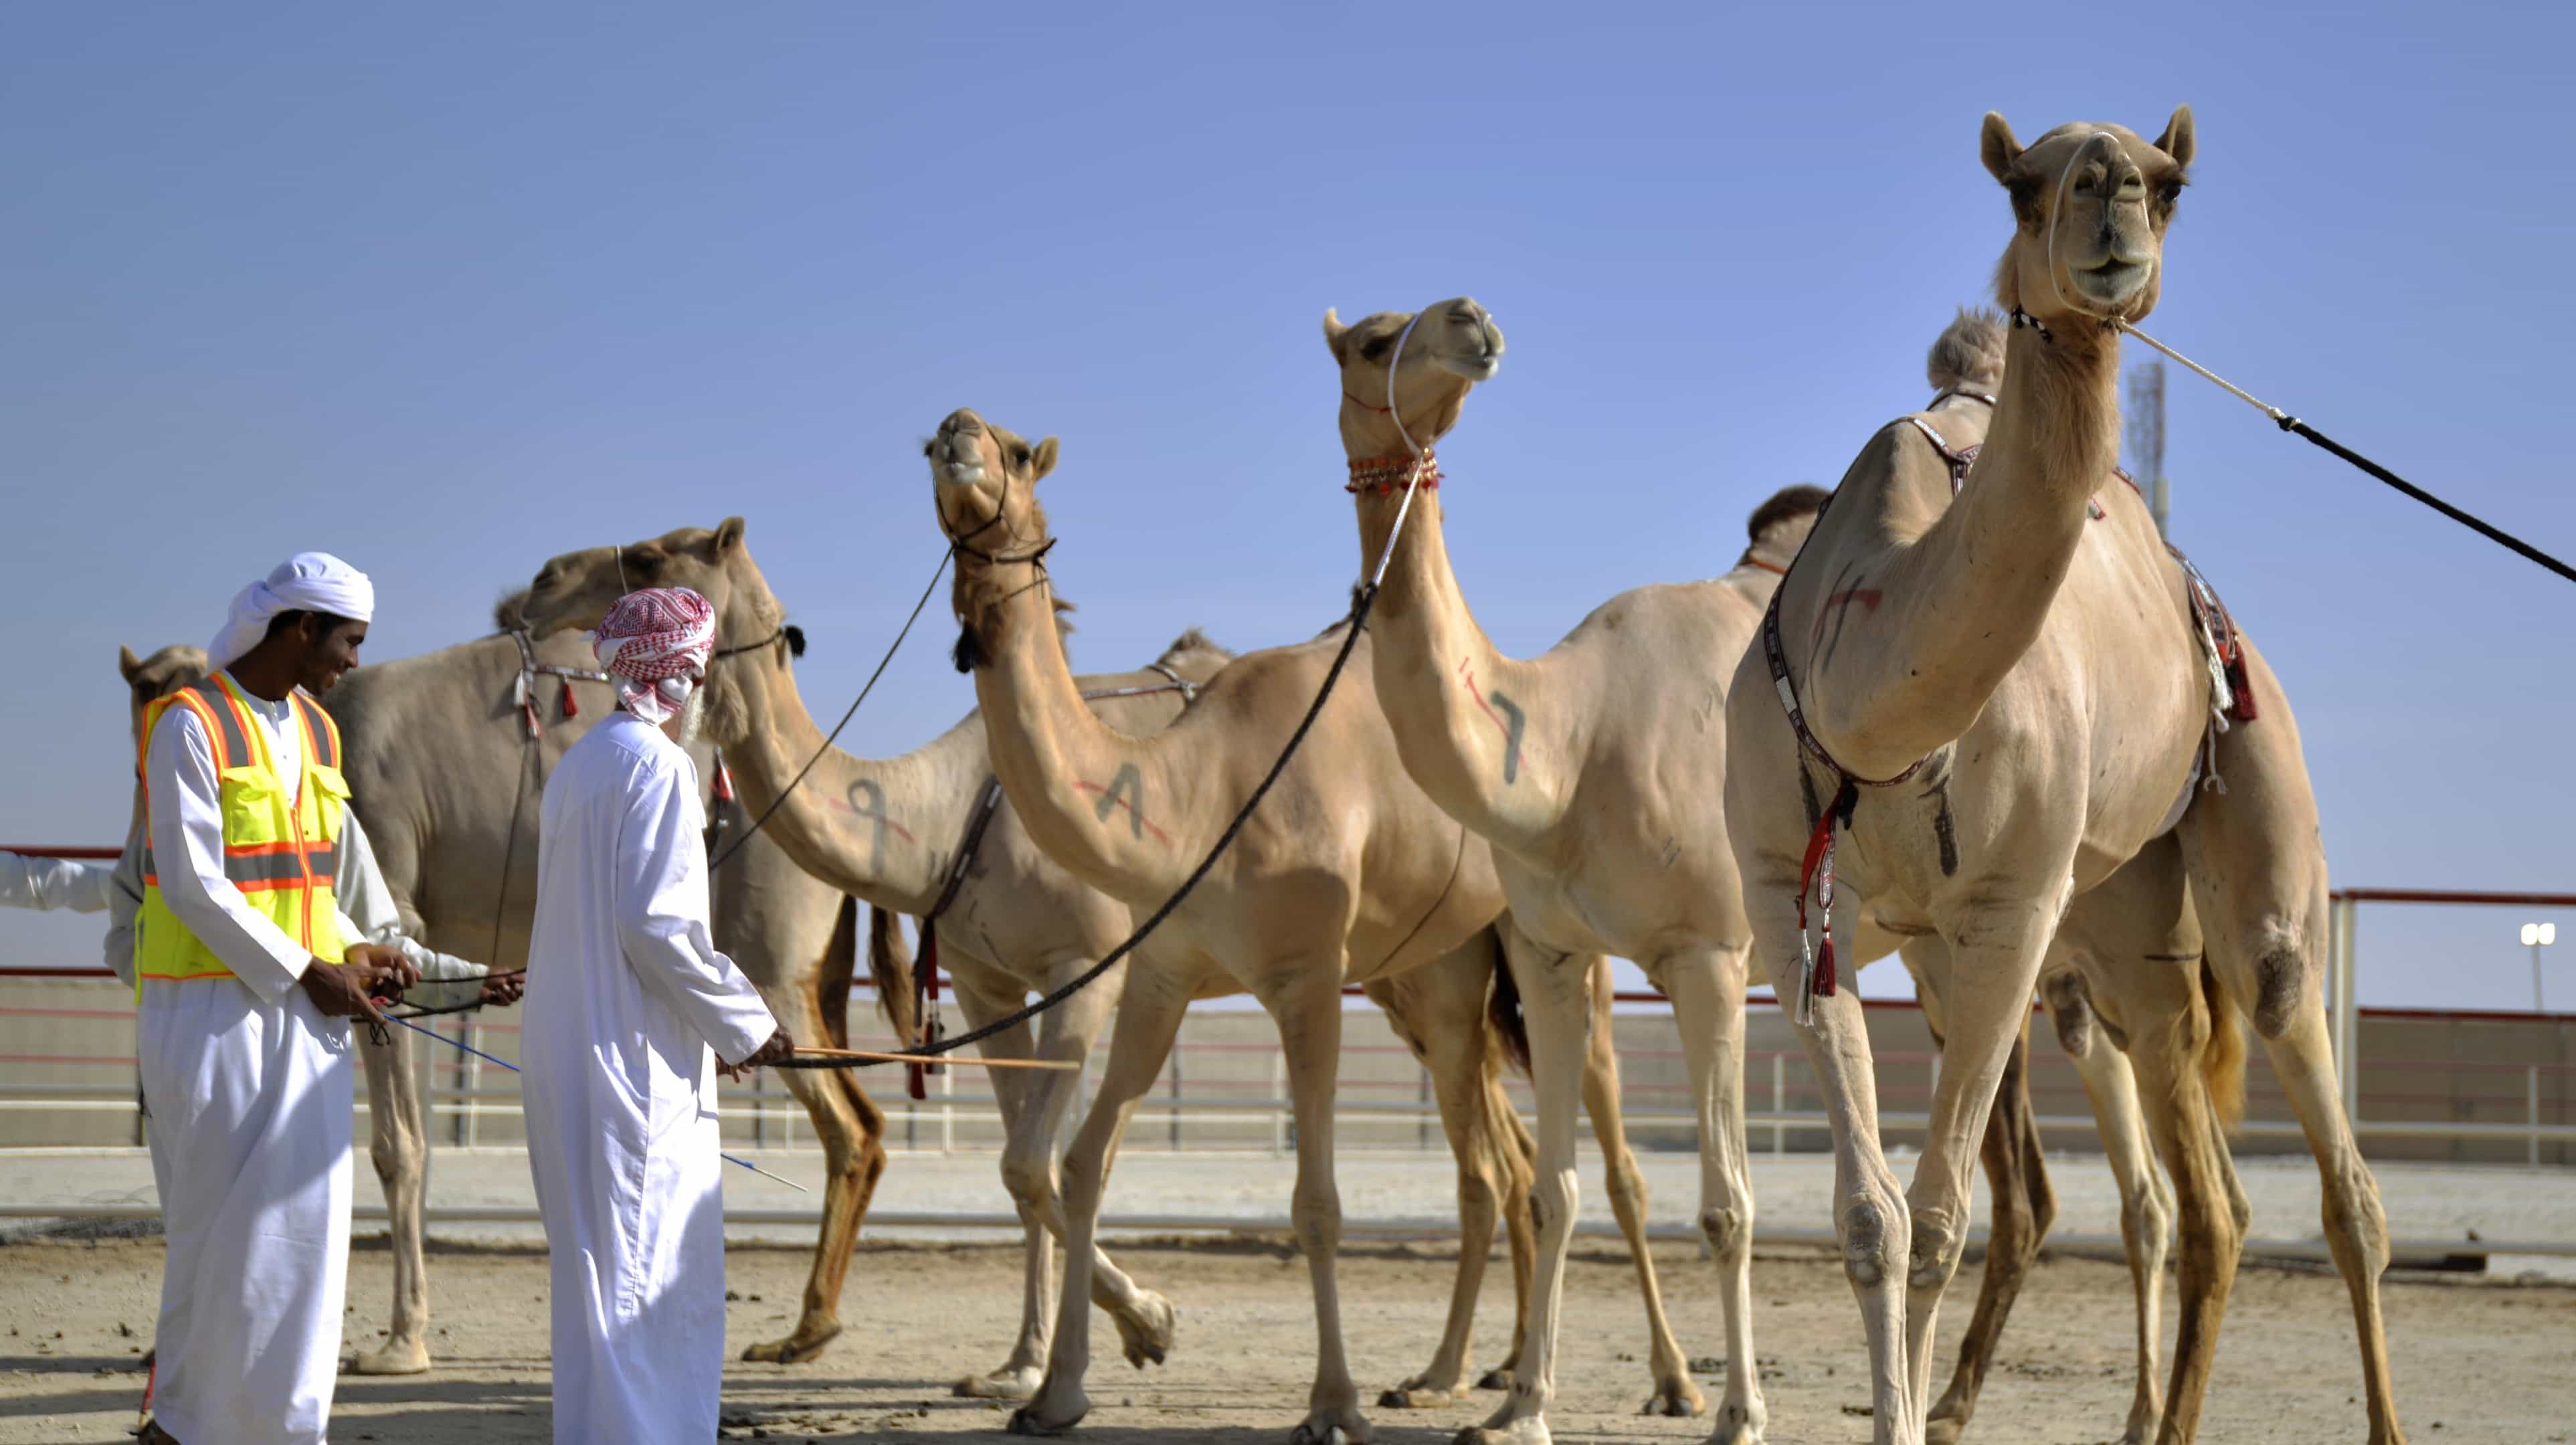 9. Watch camel racing in Al Wathba